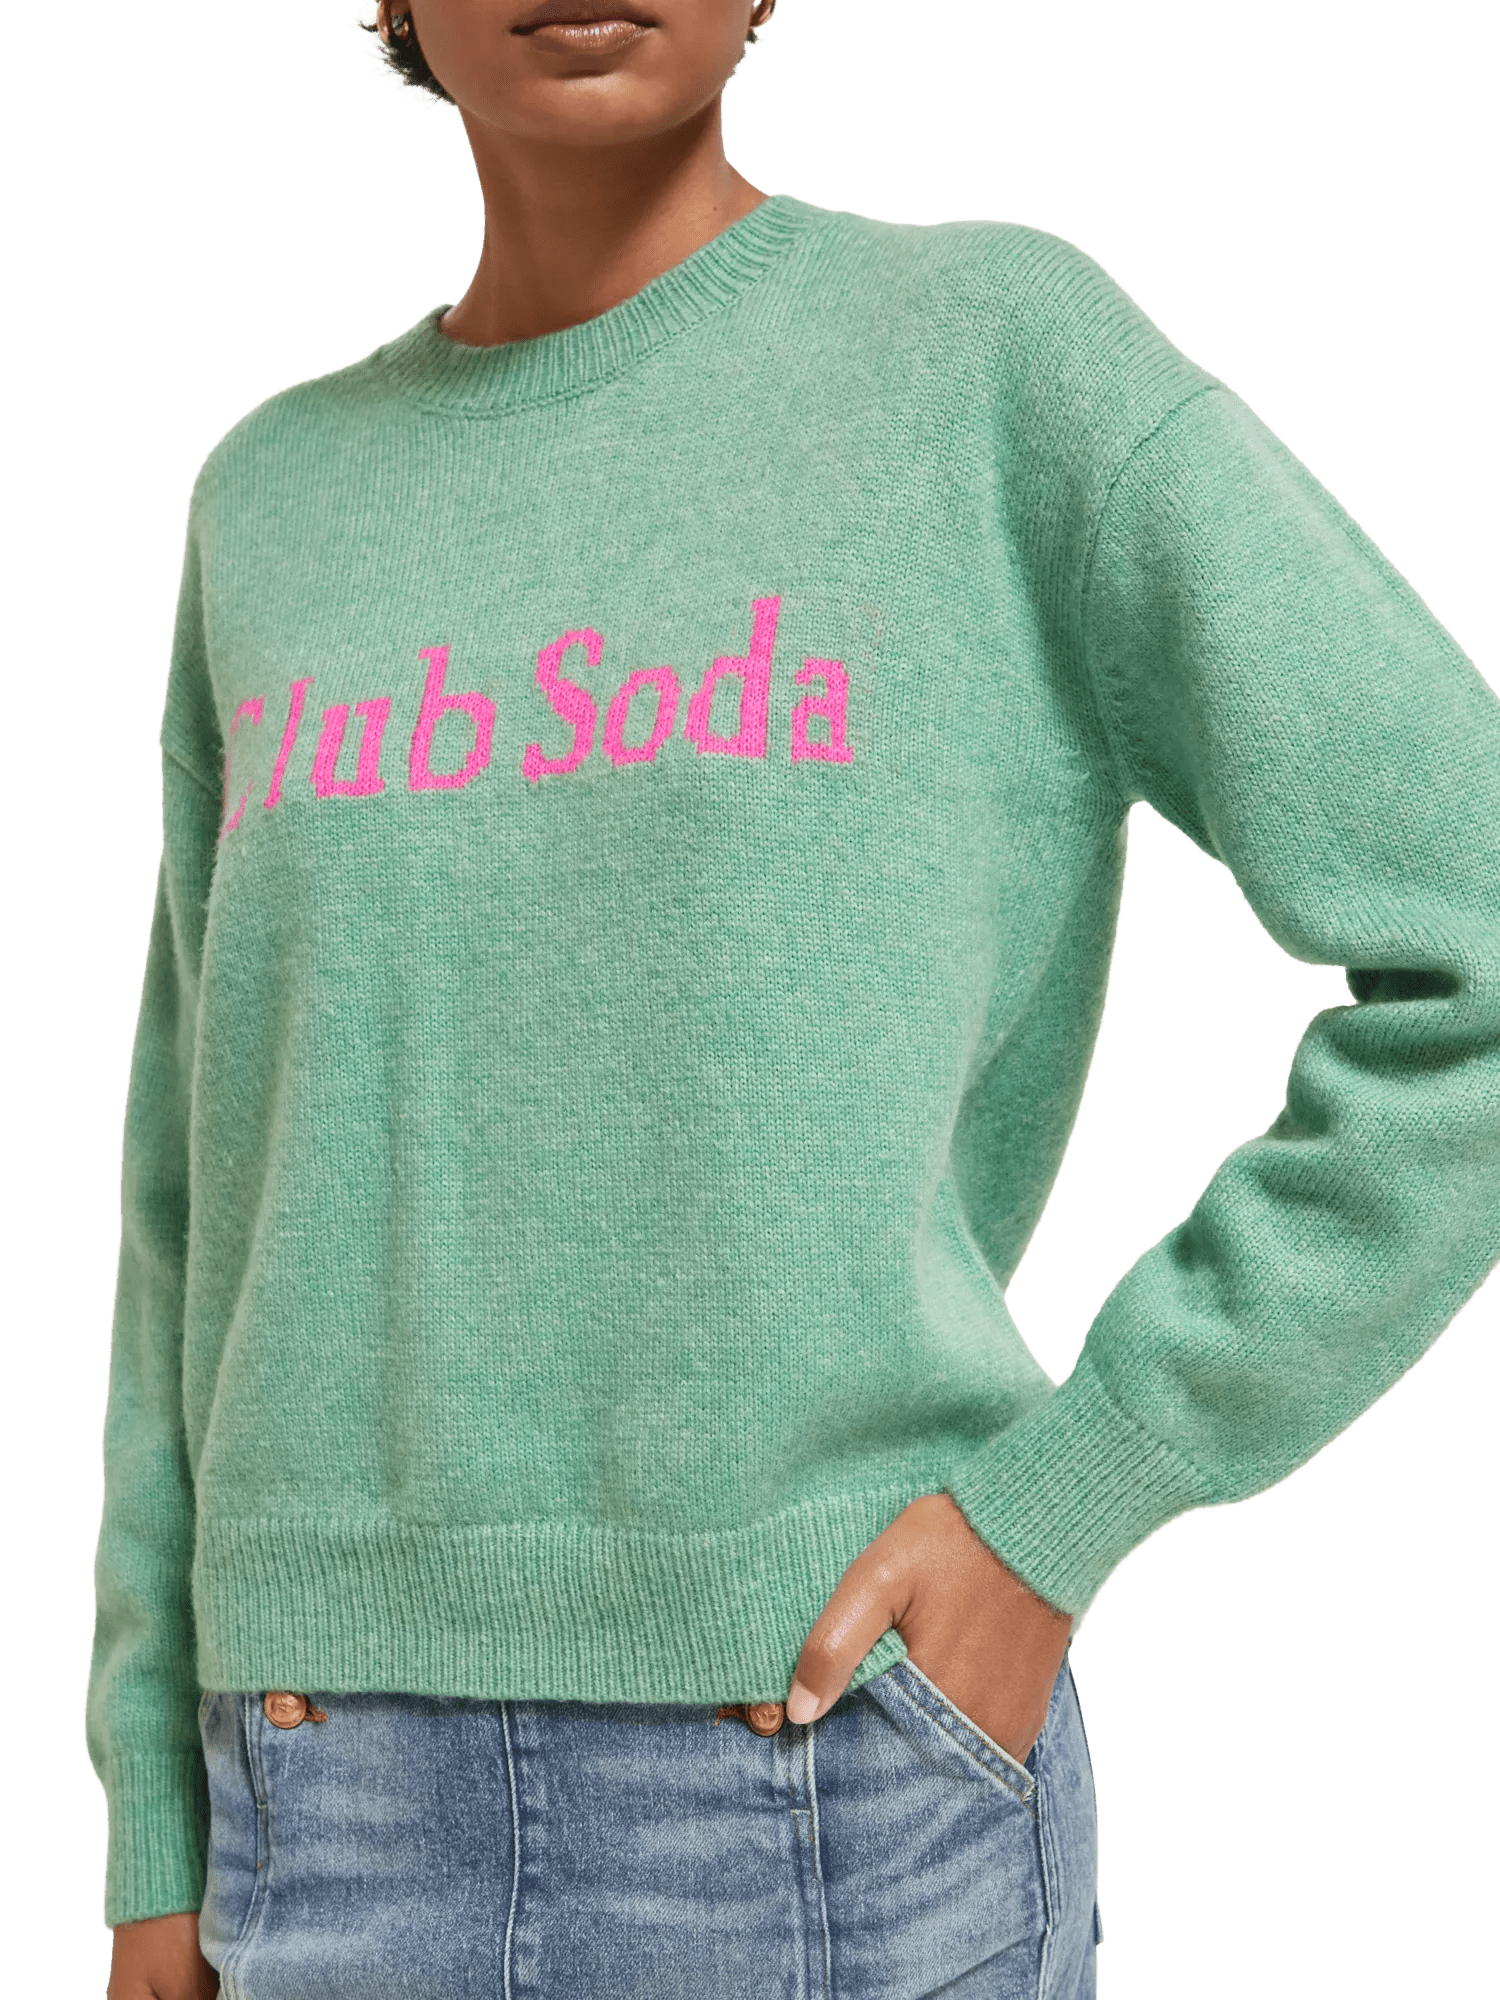 Scotch & Soda Intarsia Club Soda sweater MDL-DTL2